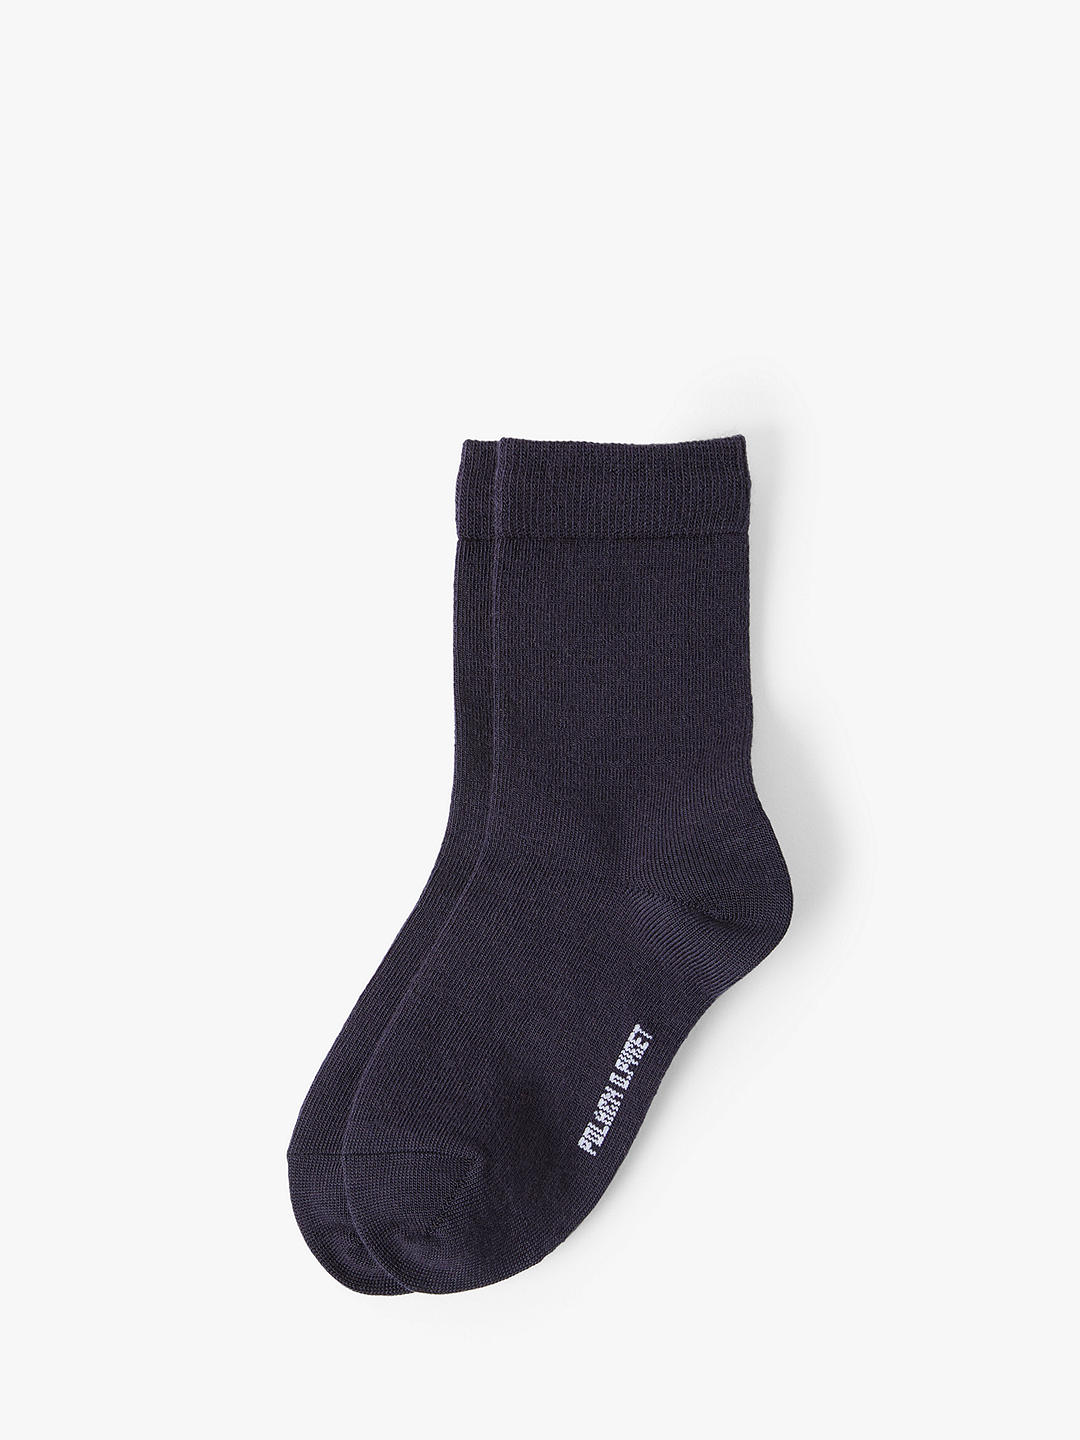 Polarn O. Pyret Kids' Merino Wool Blend Socks, Dark Sapphire